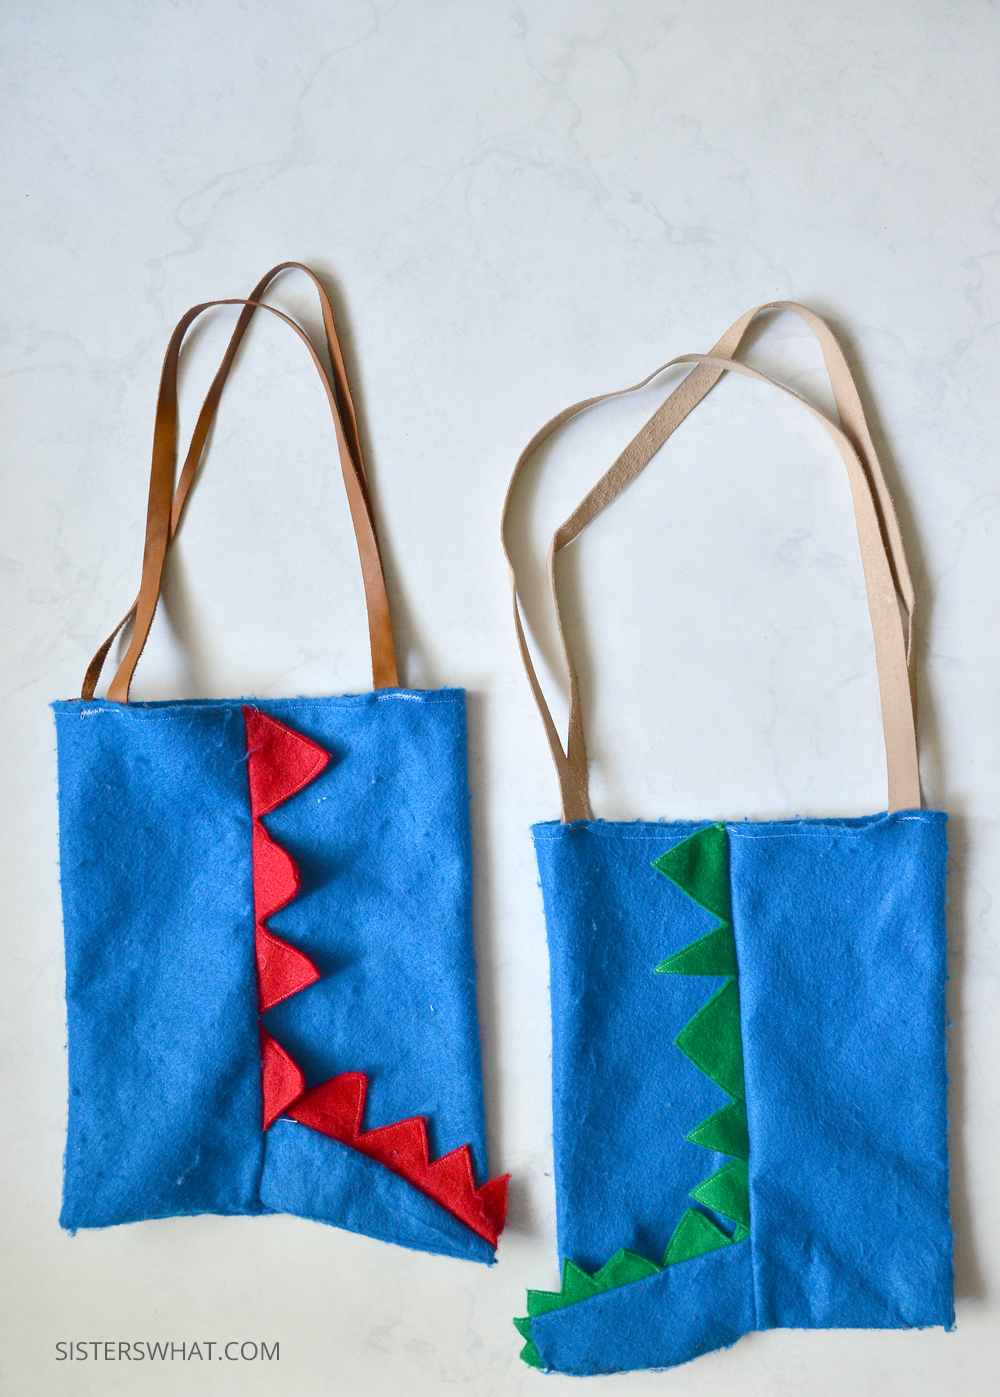 In Color Order: DIY Felt Grow Bags